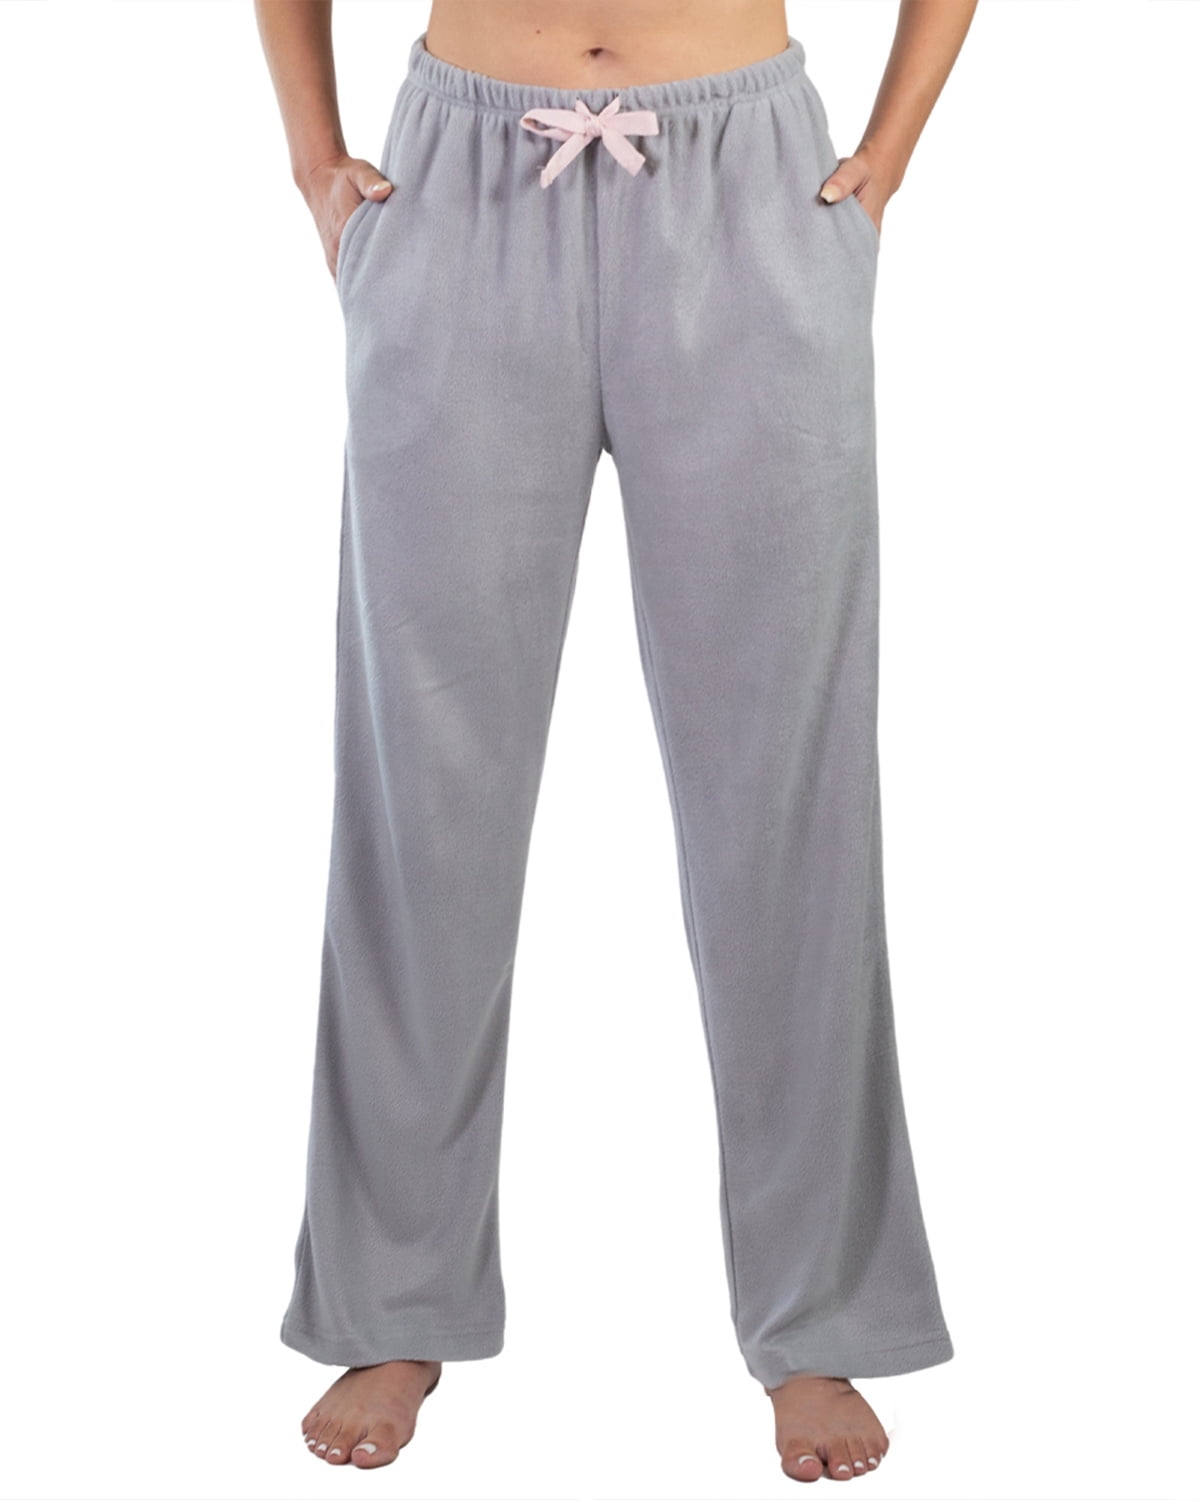 Jo & Bette Women's Fleece Pajama Pants with Pockets, Plaid Sleep